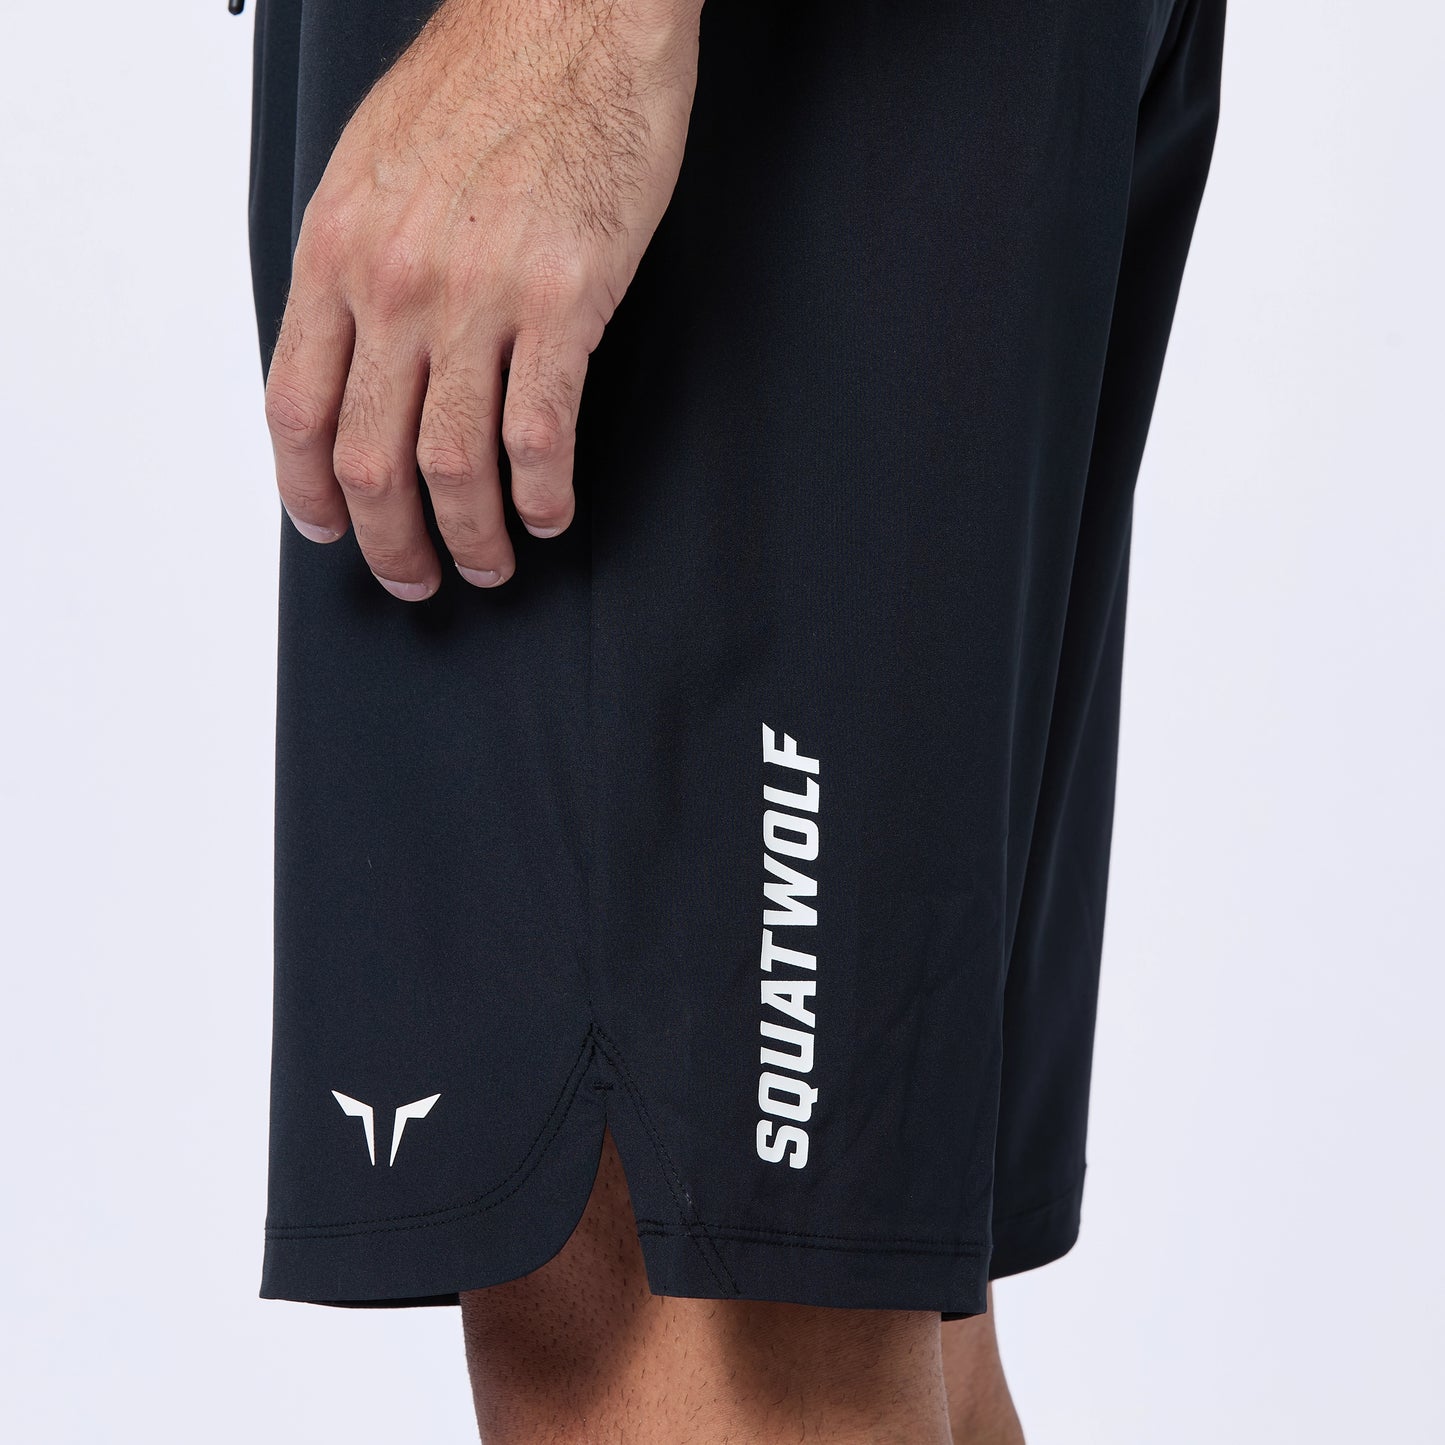 Essential Pro 9 Inch Shorts - Black